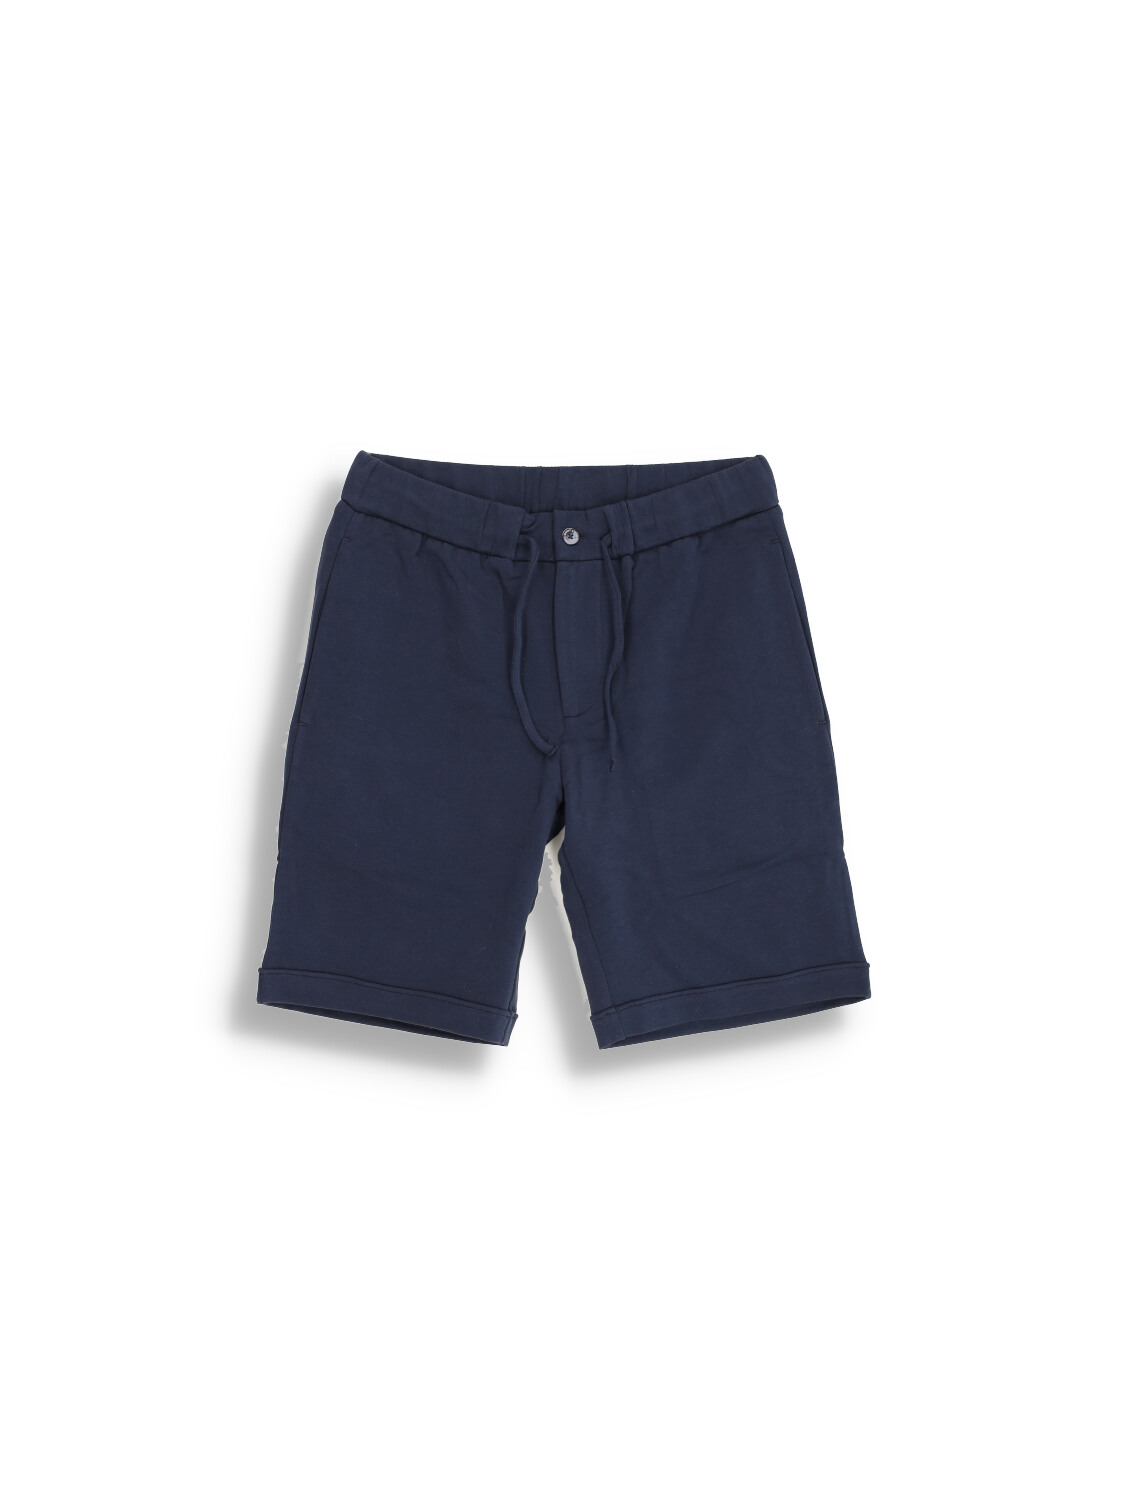 Jon Bermuda - Cotton elasticated waistband shorts